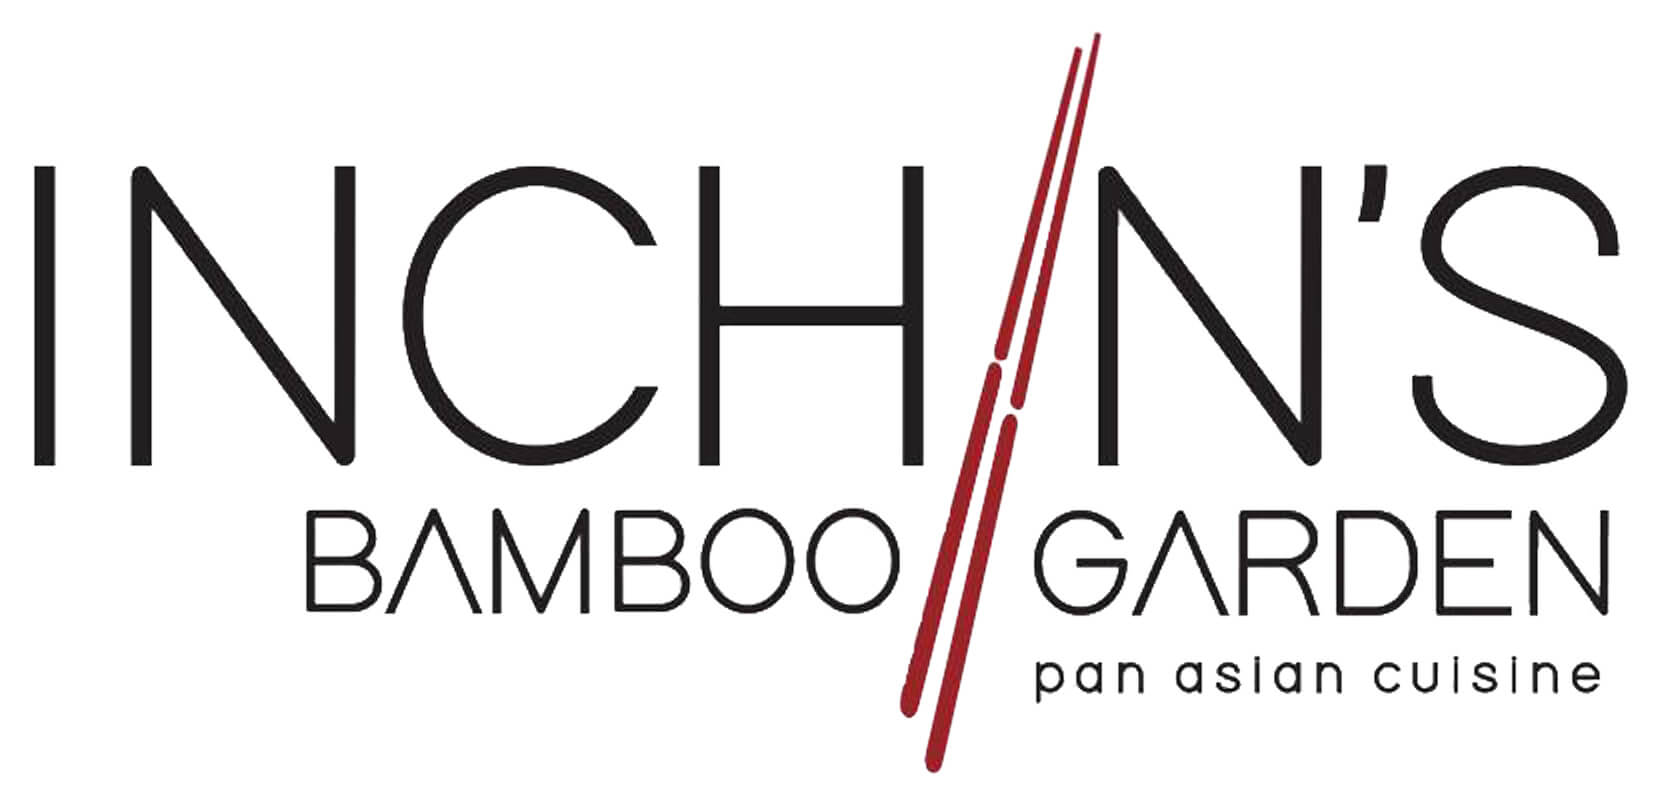 Inchins Bamboo Garden - Pan Asian Cuisine